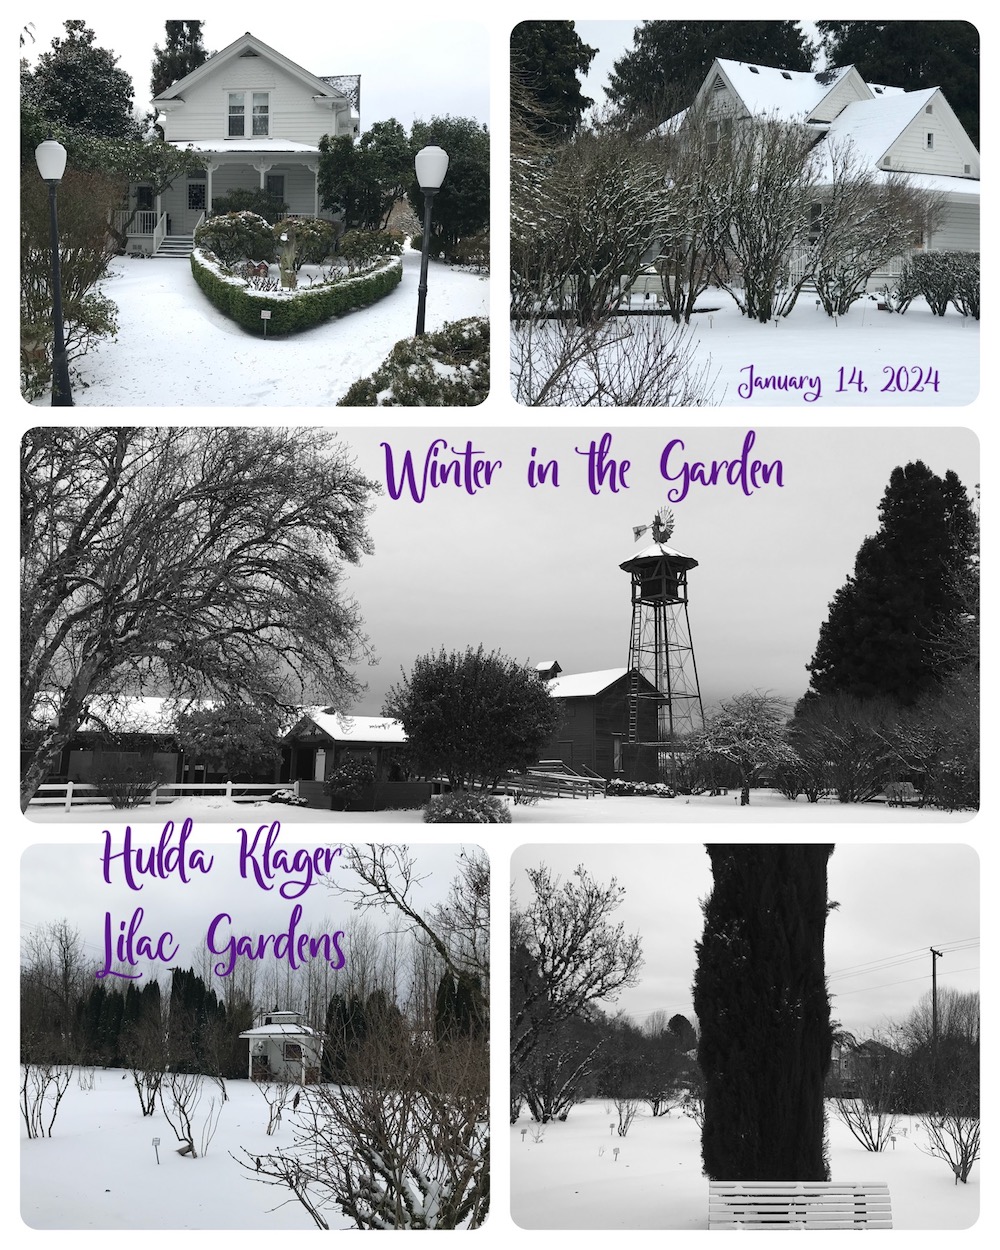 Gardens in Winter!